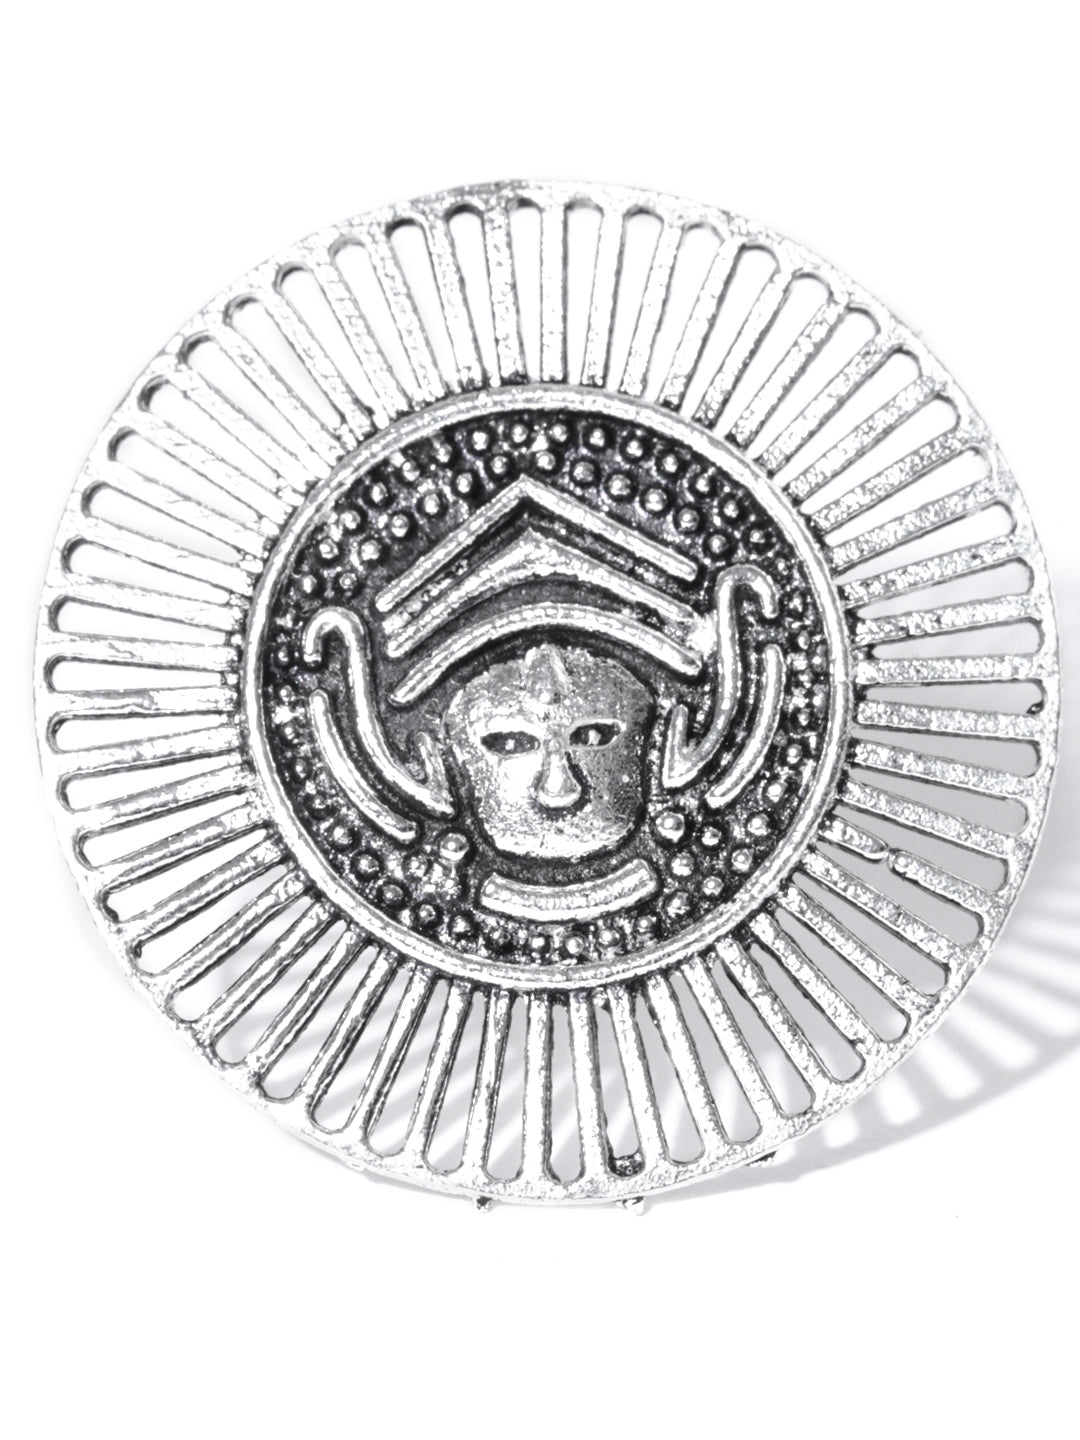 Oxidised Silver-Plated Textured Adjustable Ring